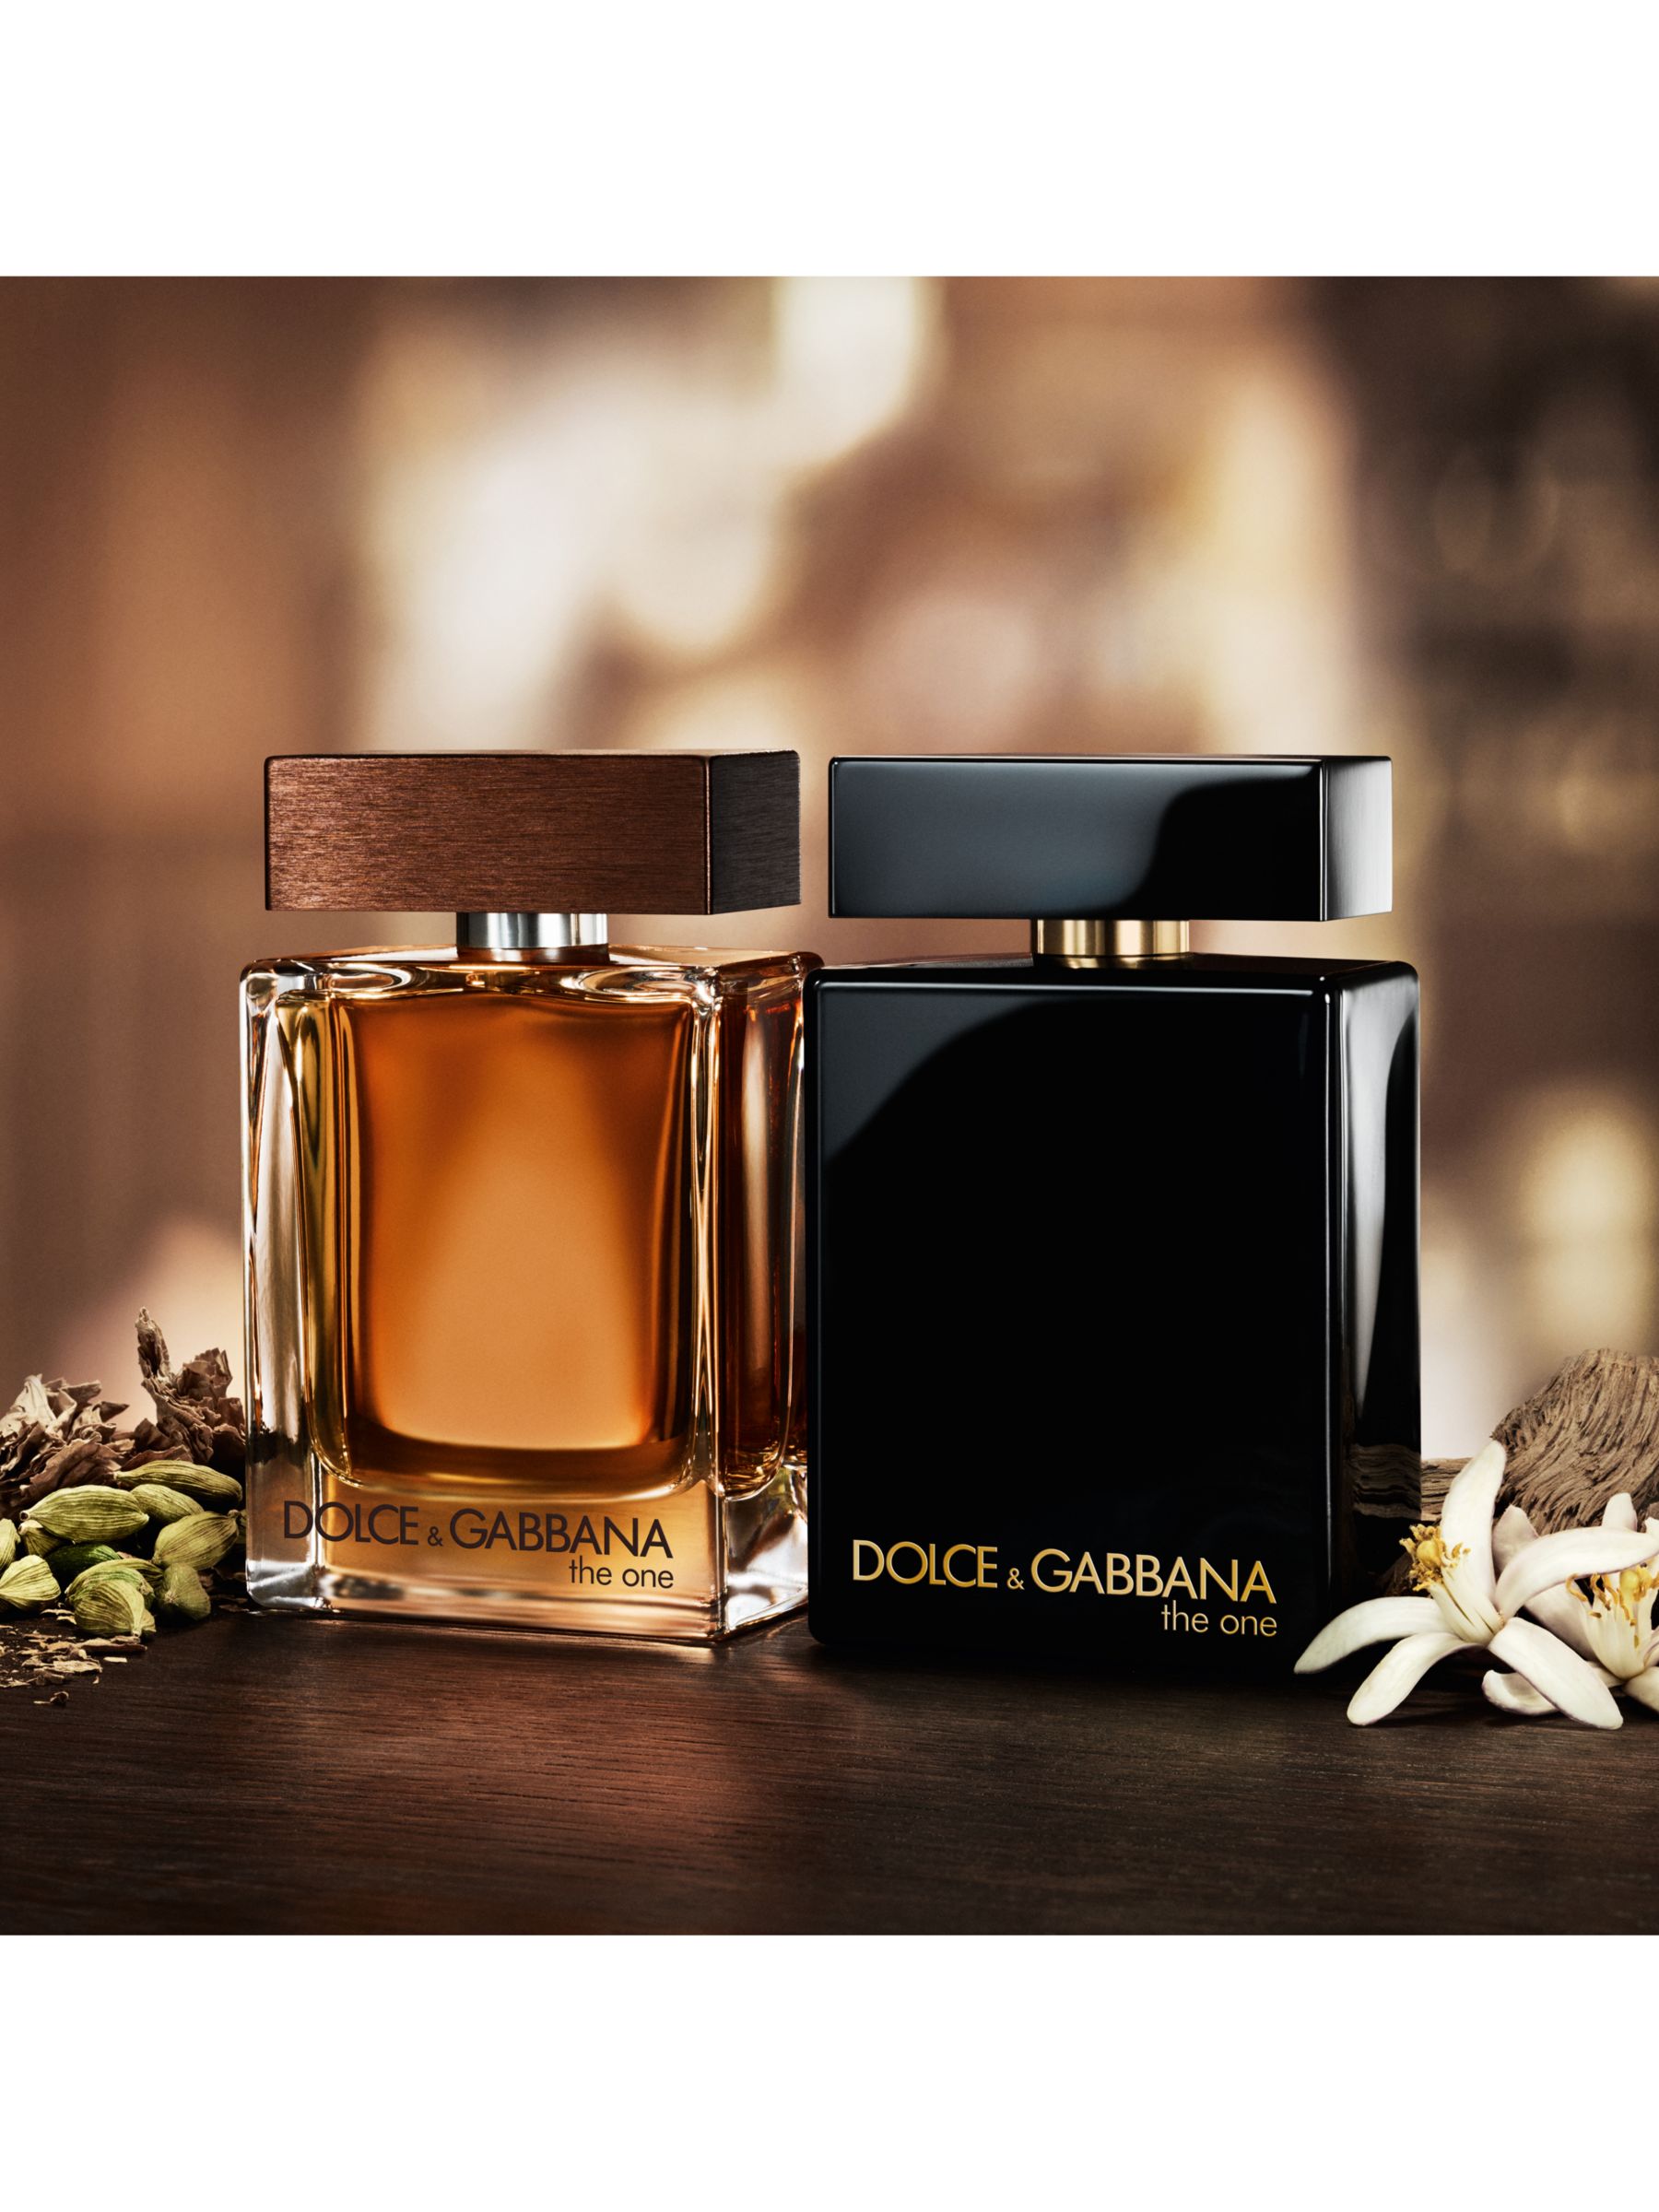 Dolce & Gabbana The One for Men Eau de Parfum Intense, 100ml